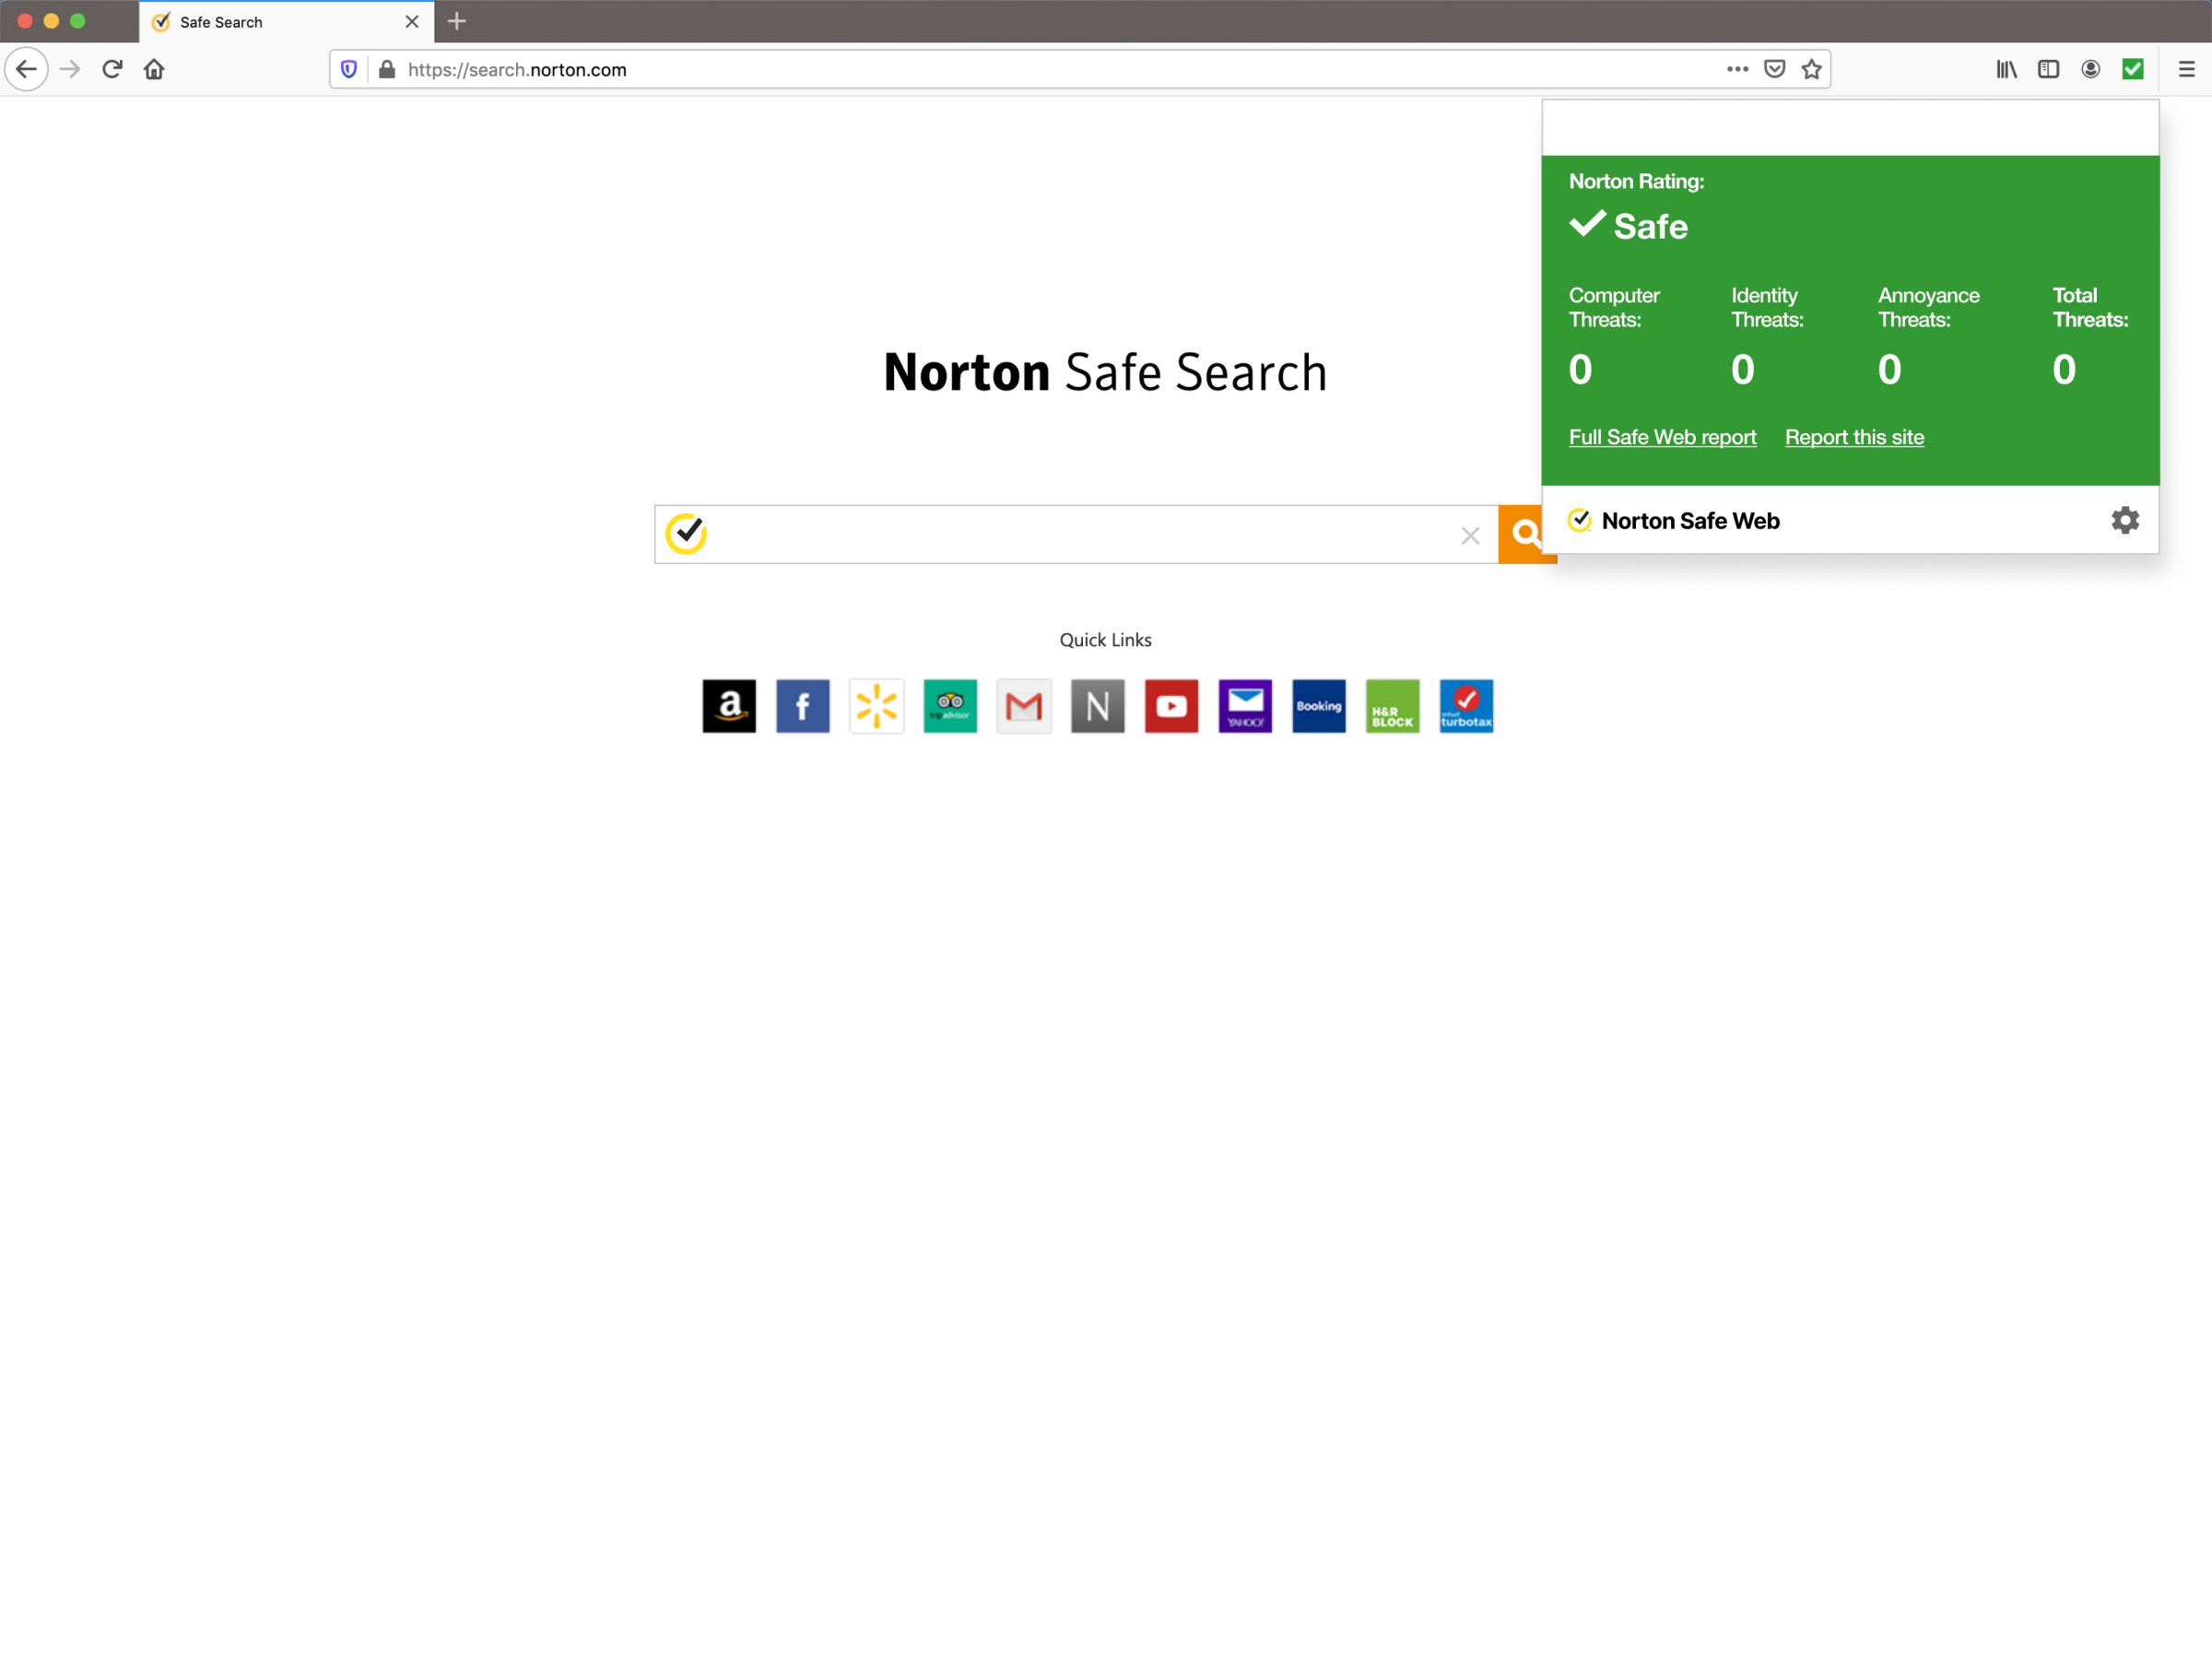 Norton Safe Web promo image